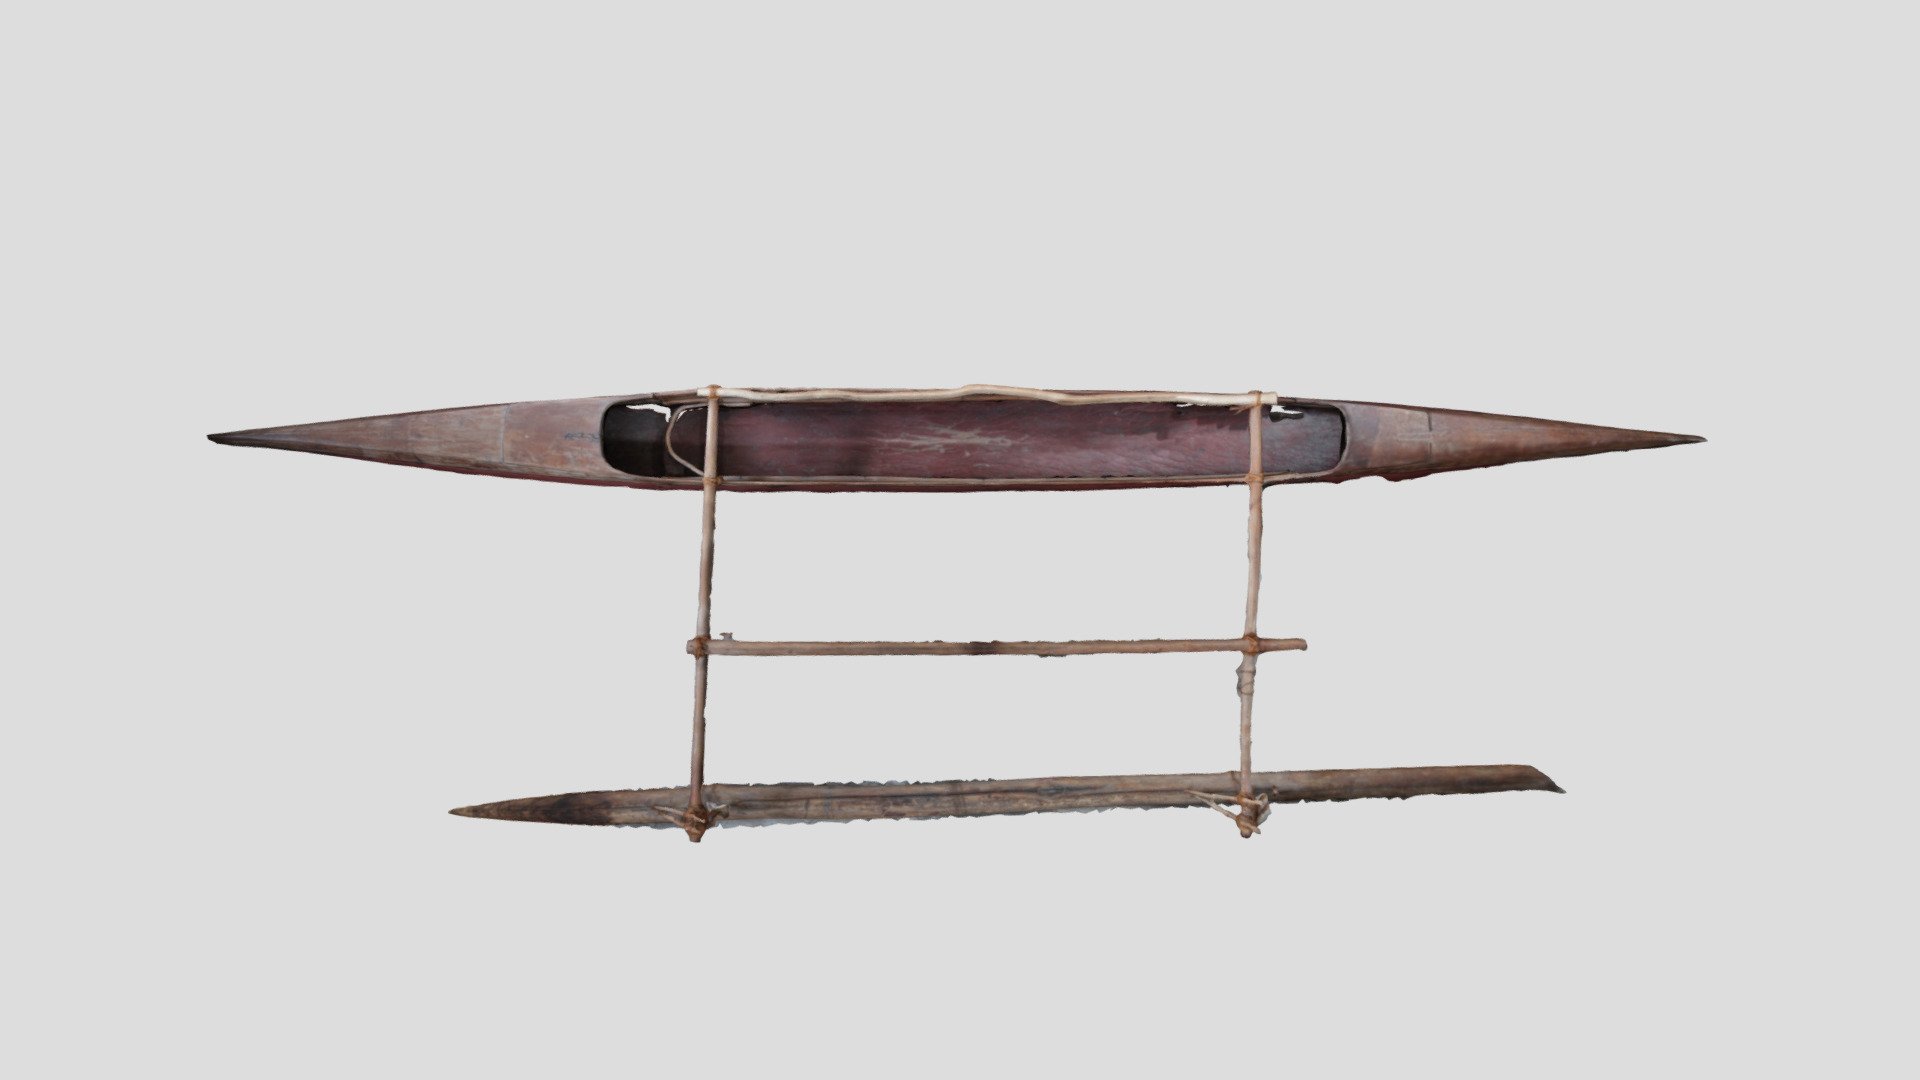 Niuean canoe "Vaka Heke Tahi"